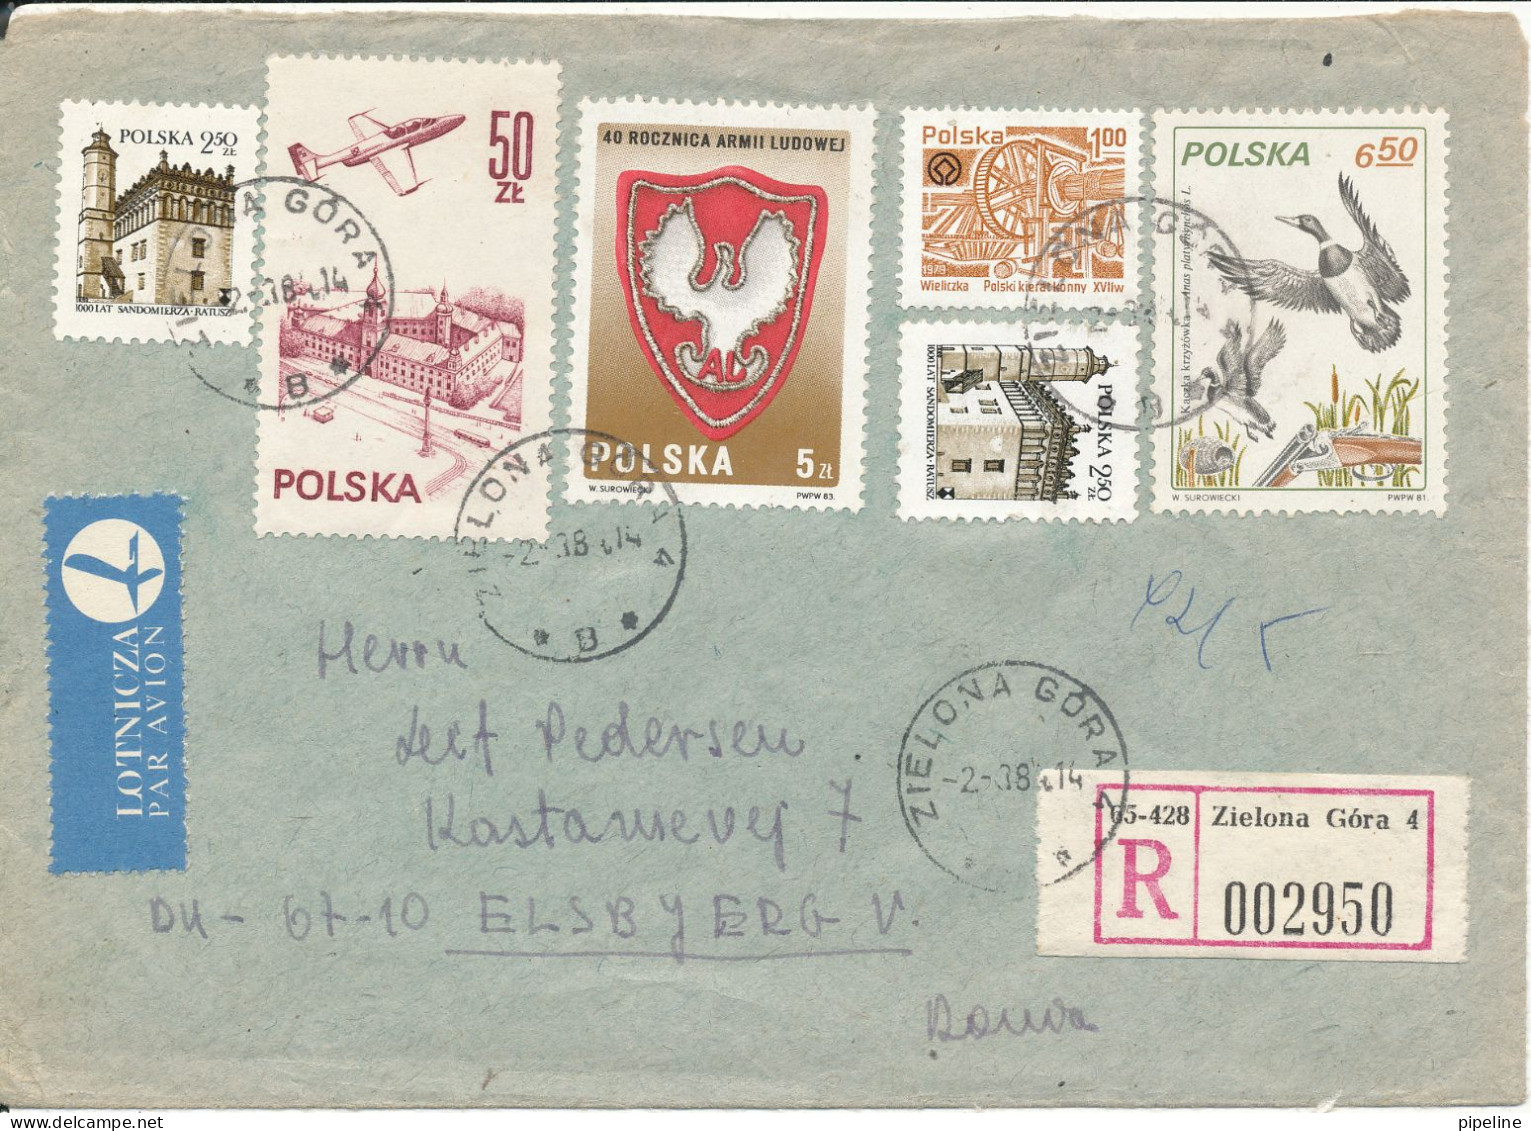 Poland Registered Cover Sent To Denmark Zielona Gora 2-3-1984 With More Topic Stamps - Cartas & Documentos